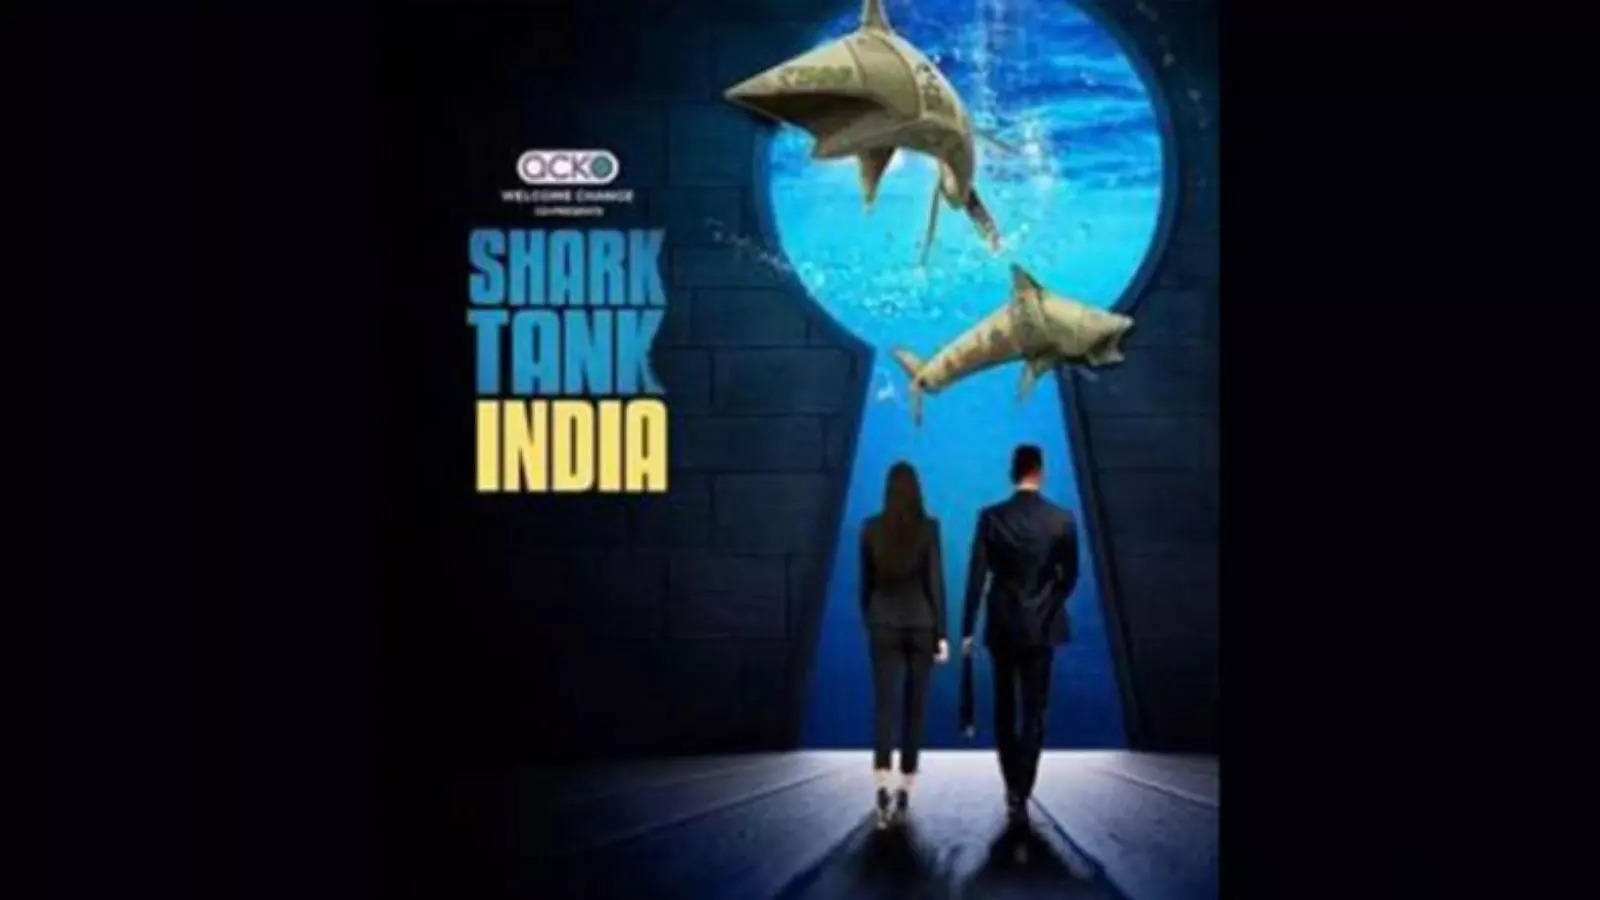 Shark Tank India Season 3: 'Shark Tank India' is back with a third